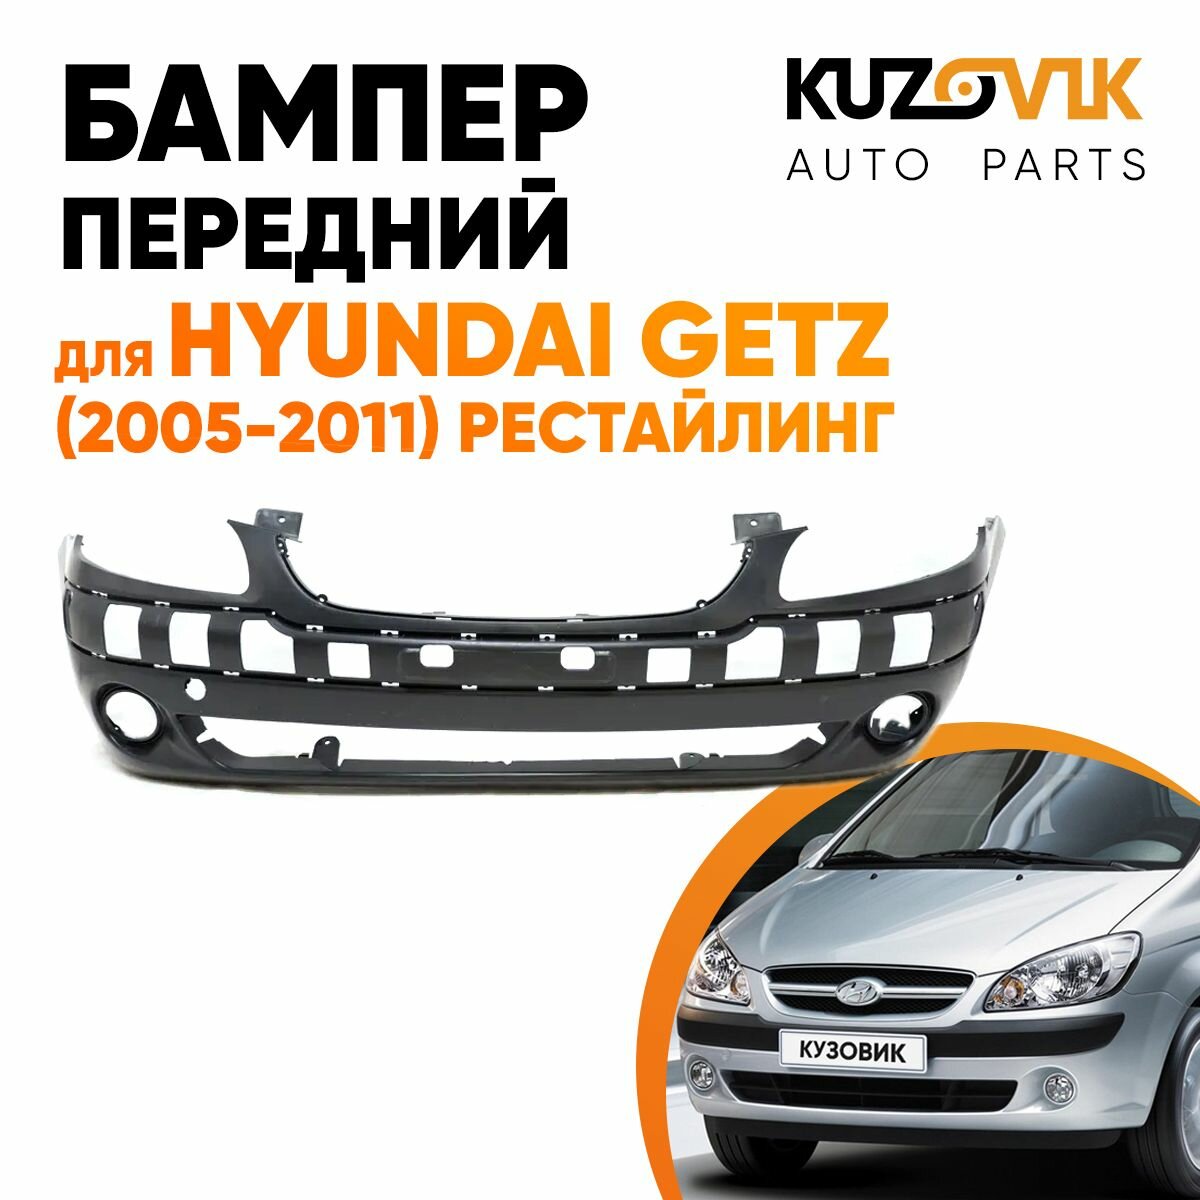 Бампер передний для Хендай Гетц Hyundai Getz (2005-2011) рестайлинг под птф